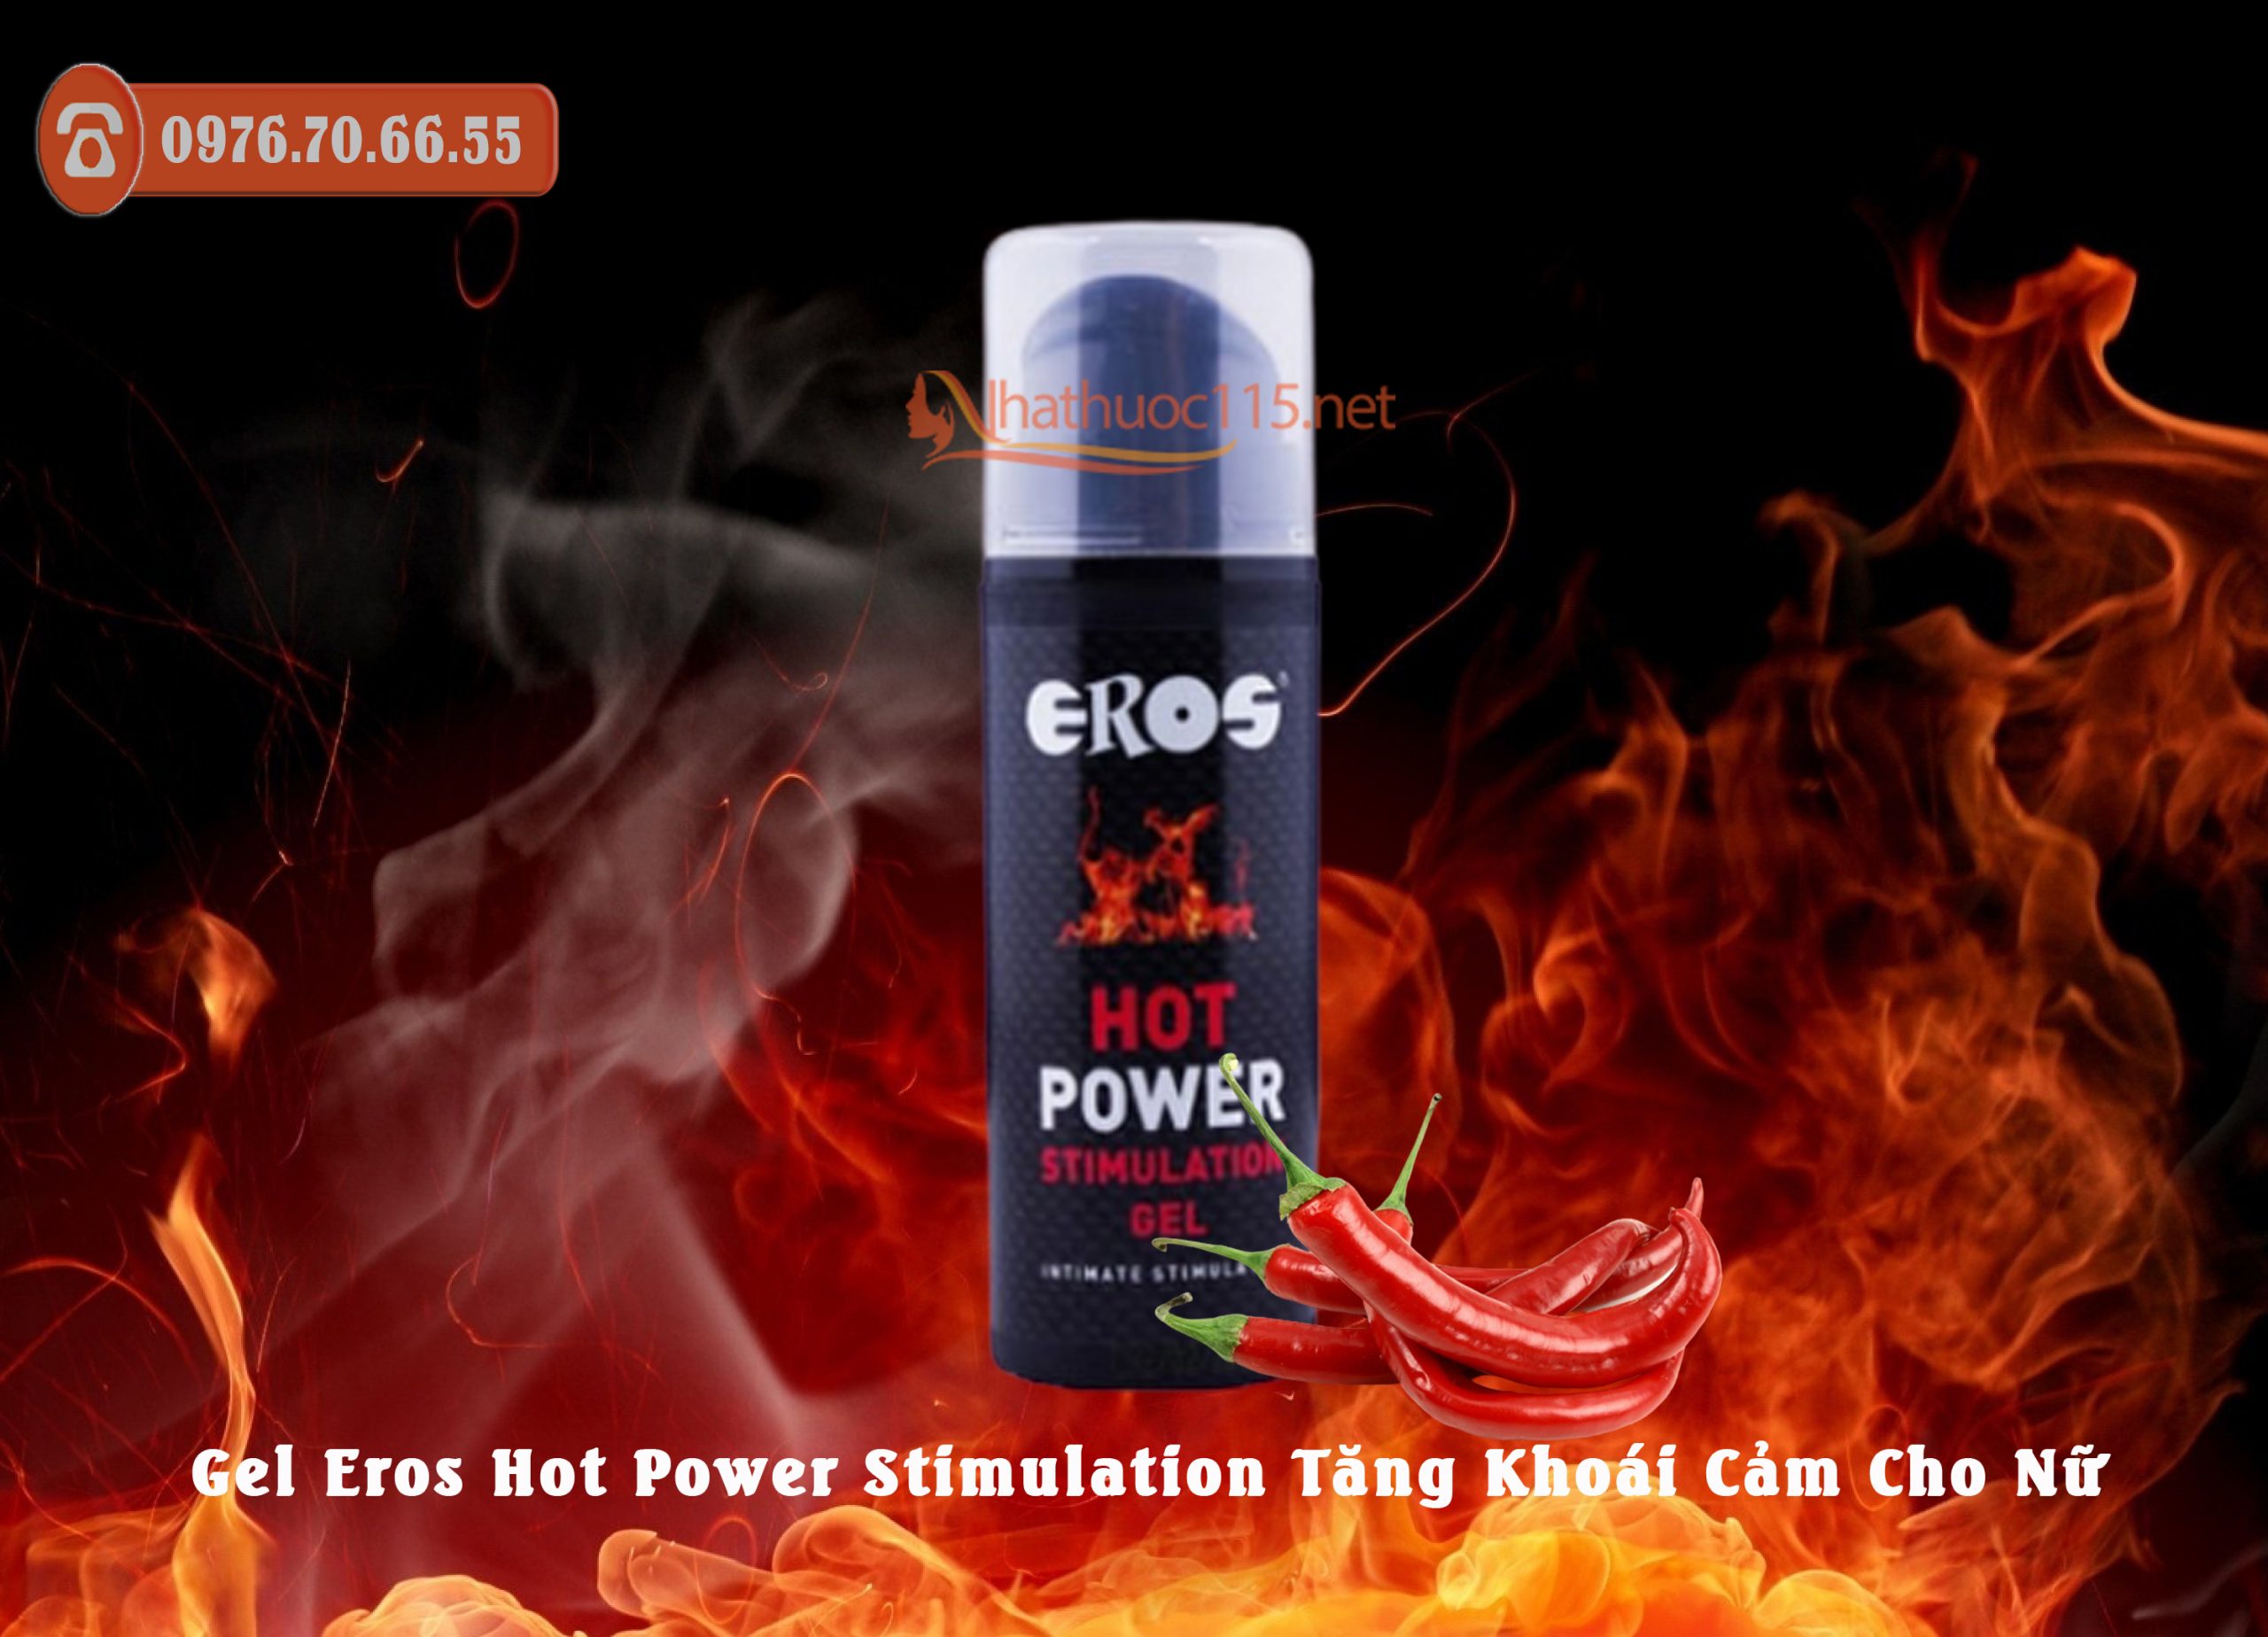 Ưu điểm Gel Eros Hot Power Stimulation